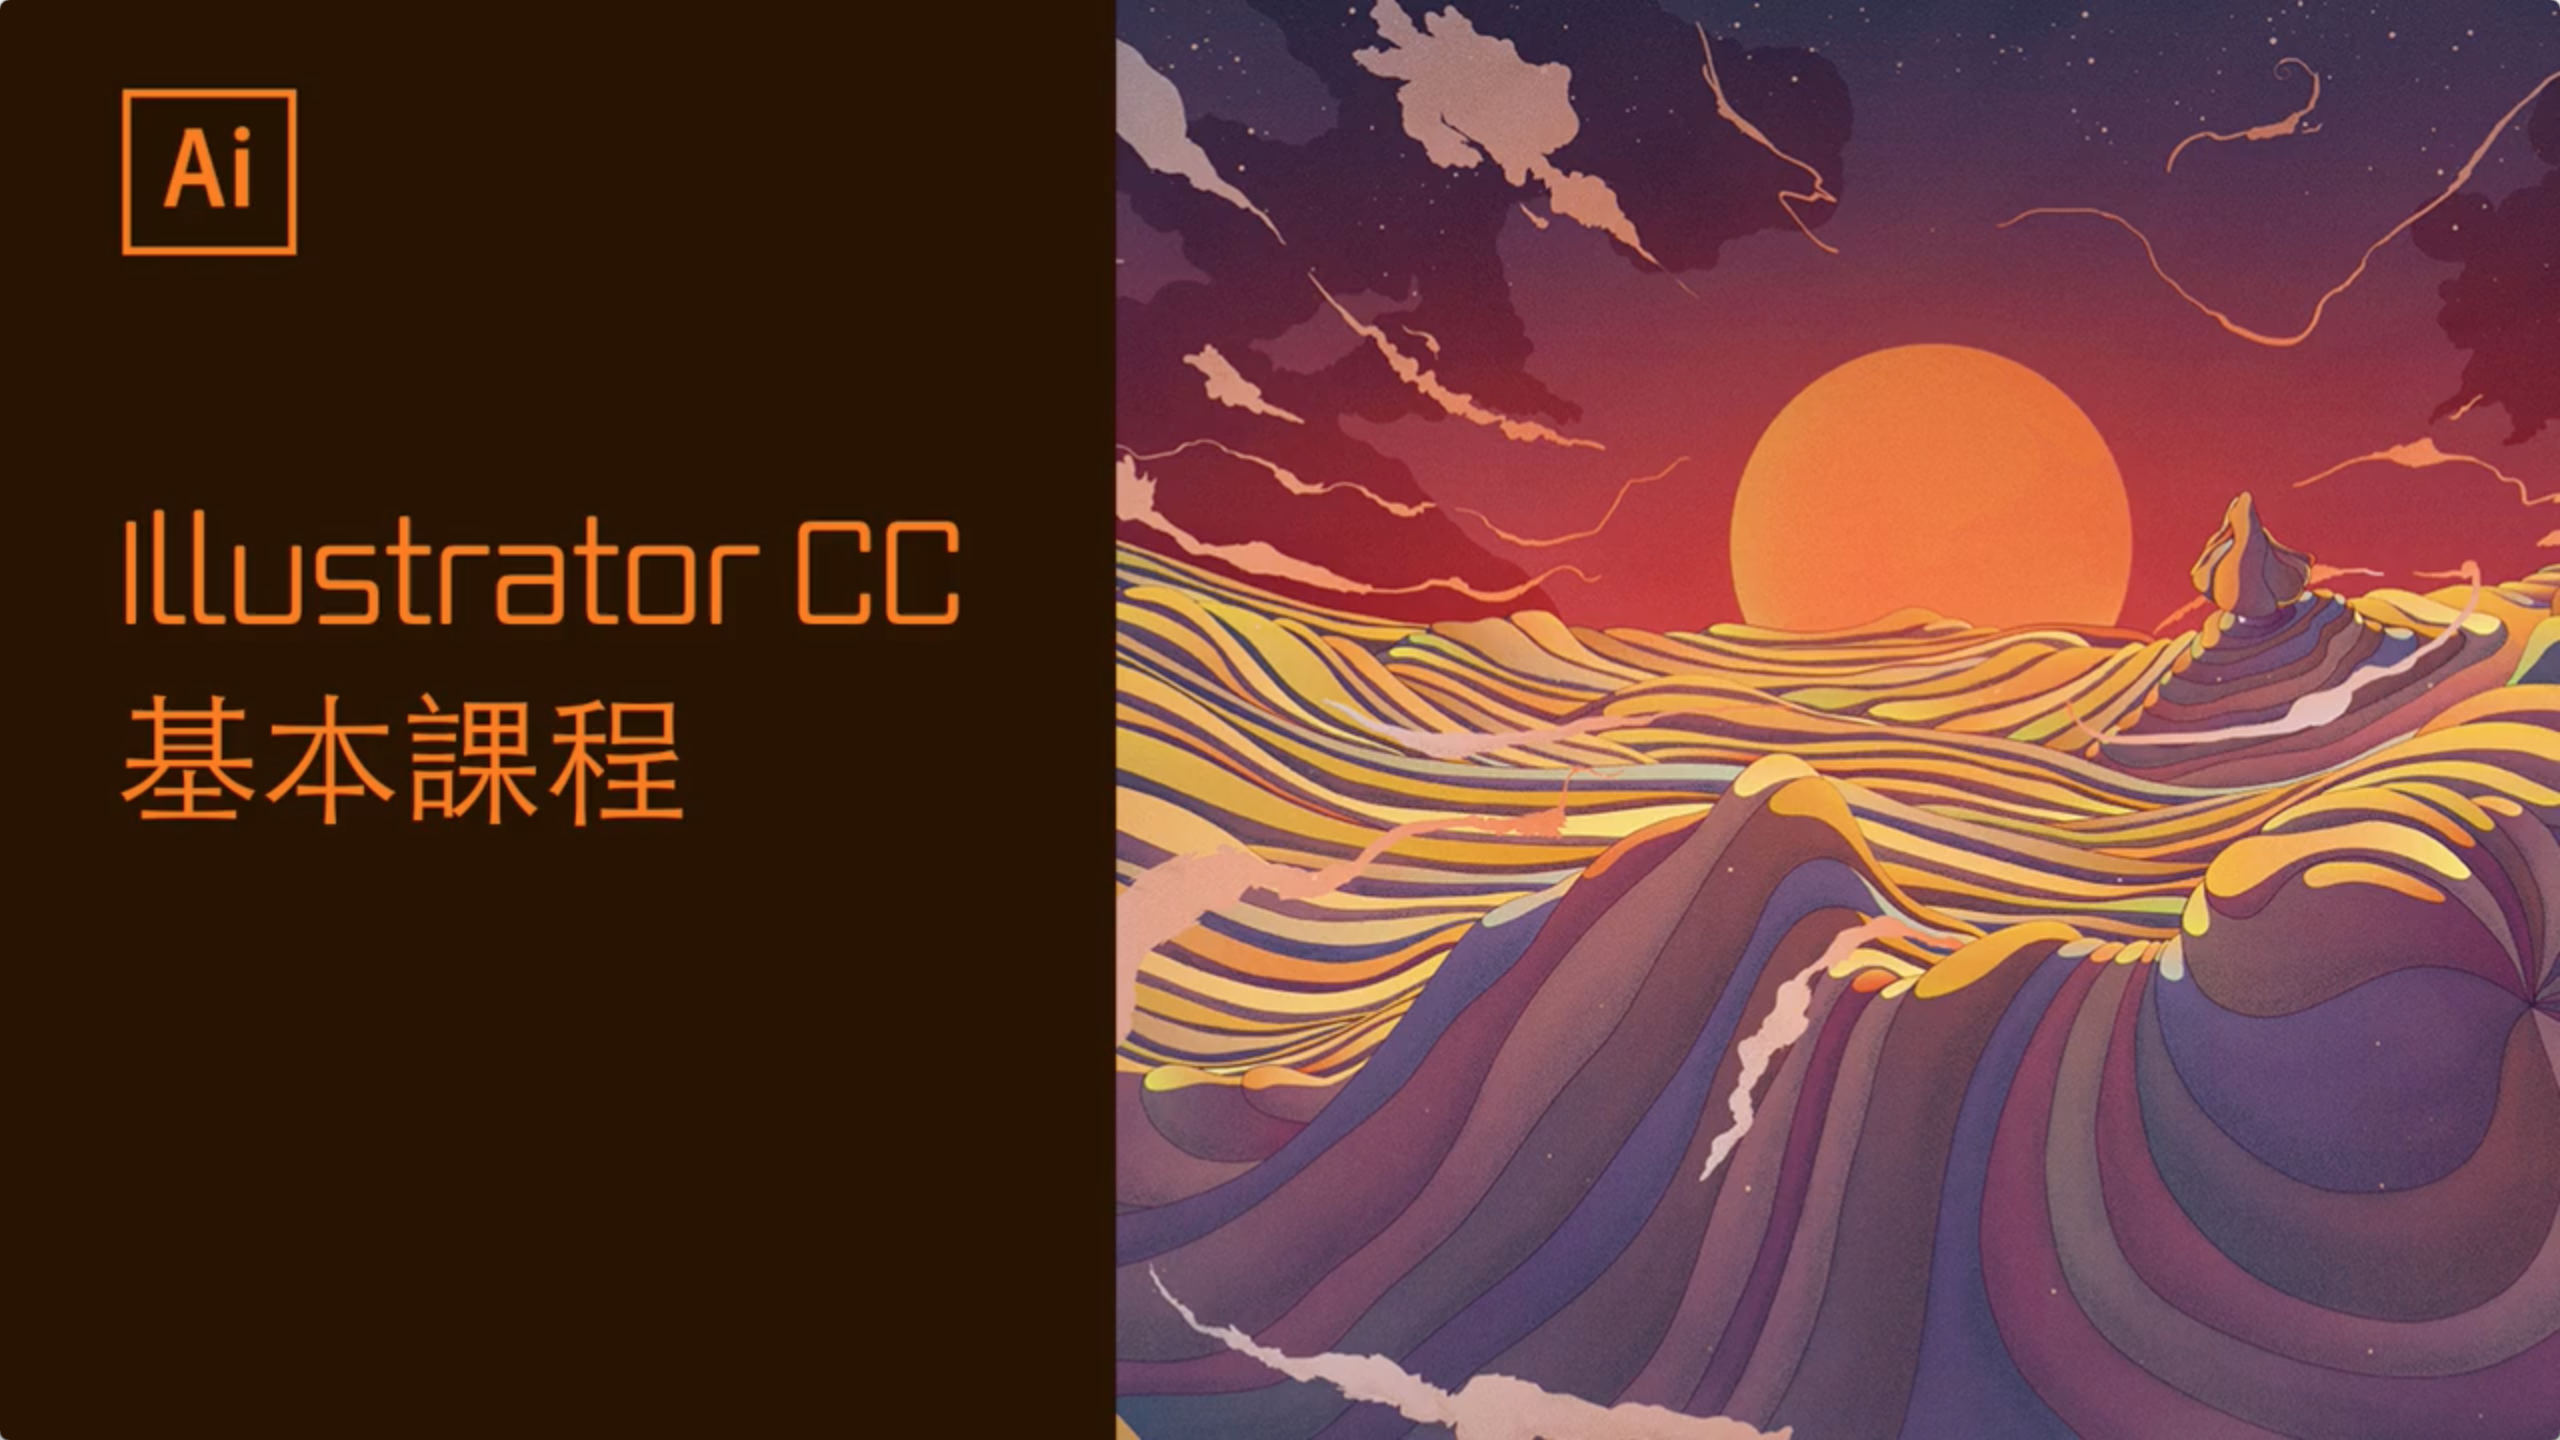 Illustrator CC 基本課程 (部分字幕)